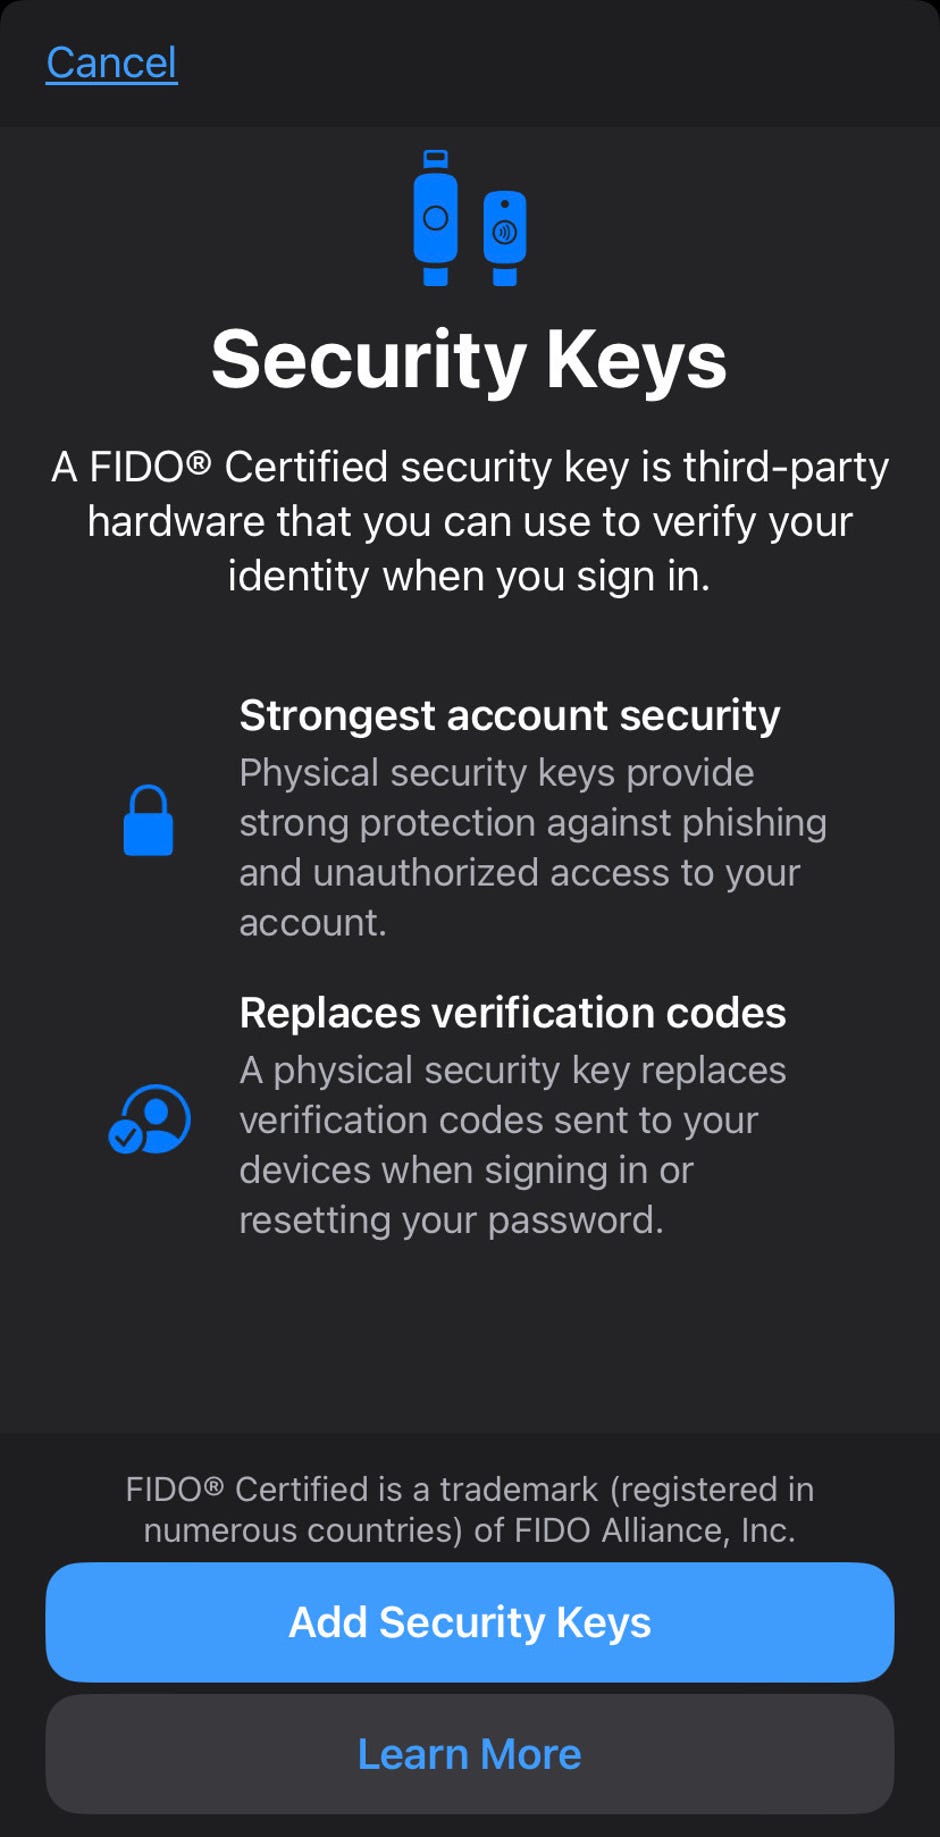 Security Keys screen in iOS 16.3 beta